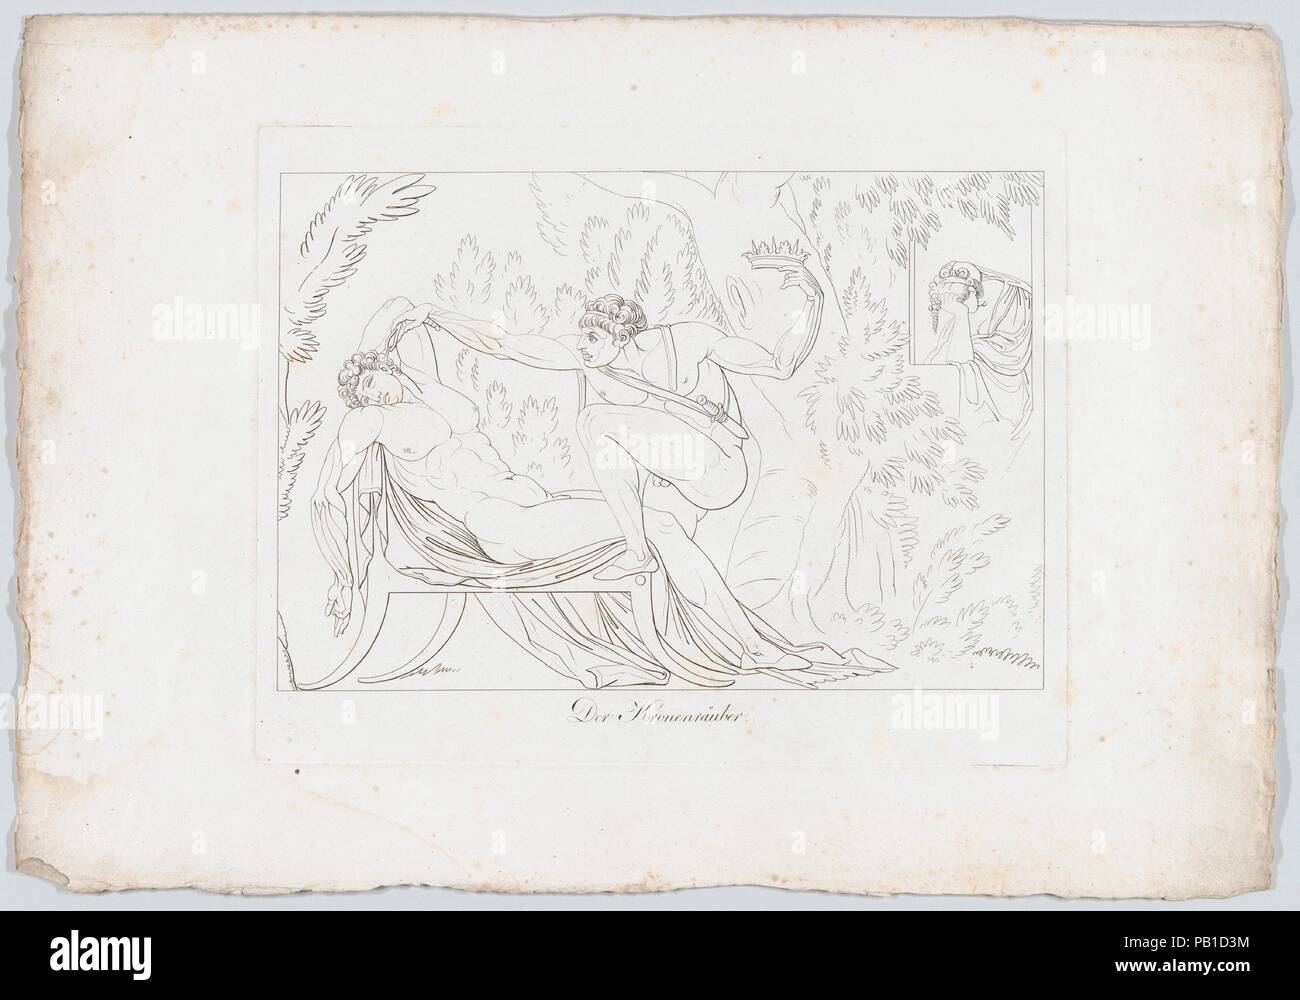 Der Kronenräuber (Claudio Murders His Brother, King Hamlet, By Pouring Poison into His Ear as He Lies Sleeping in the Garden, Shakespeare, Hamlet, Act 1, Scene 5: 58-78). Artist: After Henry Fuseli (Swiss, Zürich 1741-1825 London). Dimensions: Plate: 9 13/16 × 12 5/8 in. (25 × 32 cm)  Sheet: 13 9/16 × 19 1/8 in. (34.4 × 48.5 cm). Engraver: Johann Heinrich Lips (Swiss, Kloten 1758-1817 Zurich). Series/Portfolio: Heinrich Fuessli's Sämmtliche Werke, 1807, part I, no. 8. Subject: William Shakespeare (British, Stratford-upon-Avon 1564-1616 Stratford-upon-Avon). Date: 1806. Museum: Metropolitan Mus Stock Photo